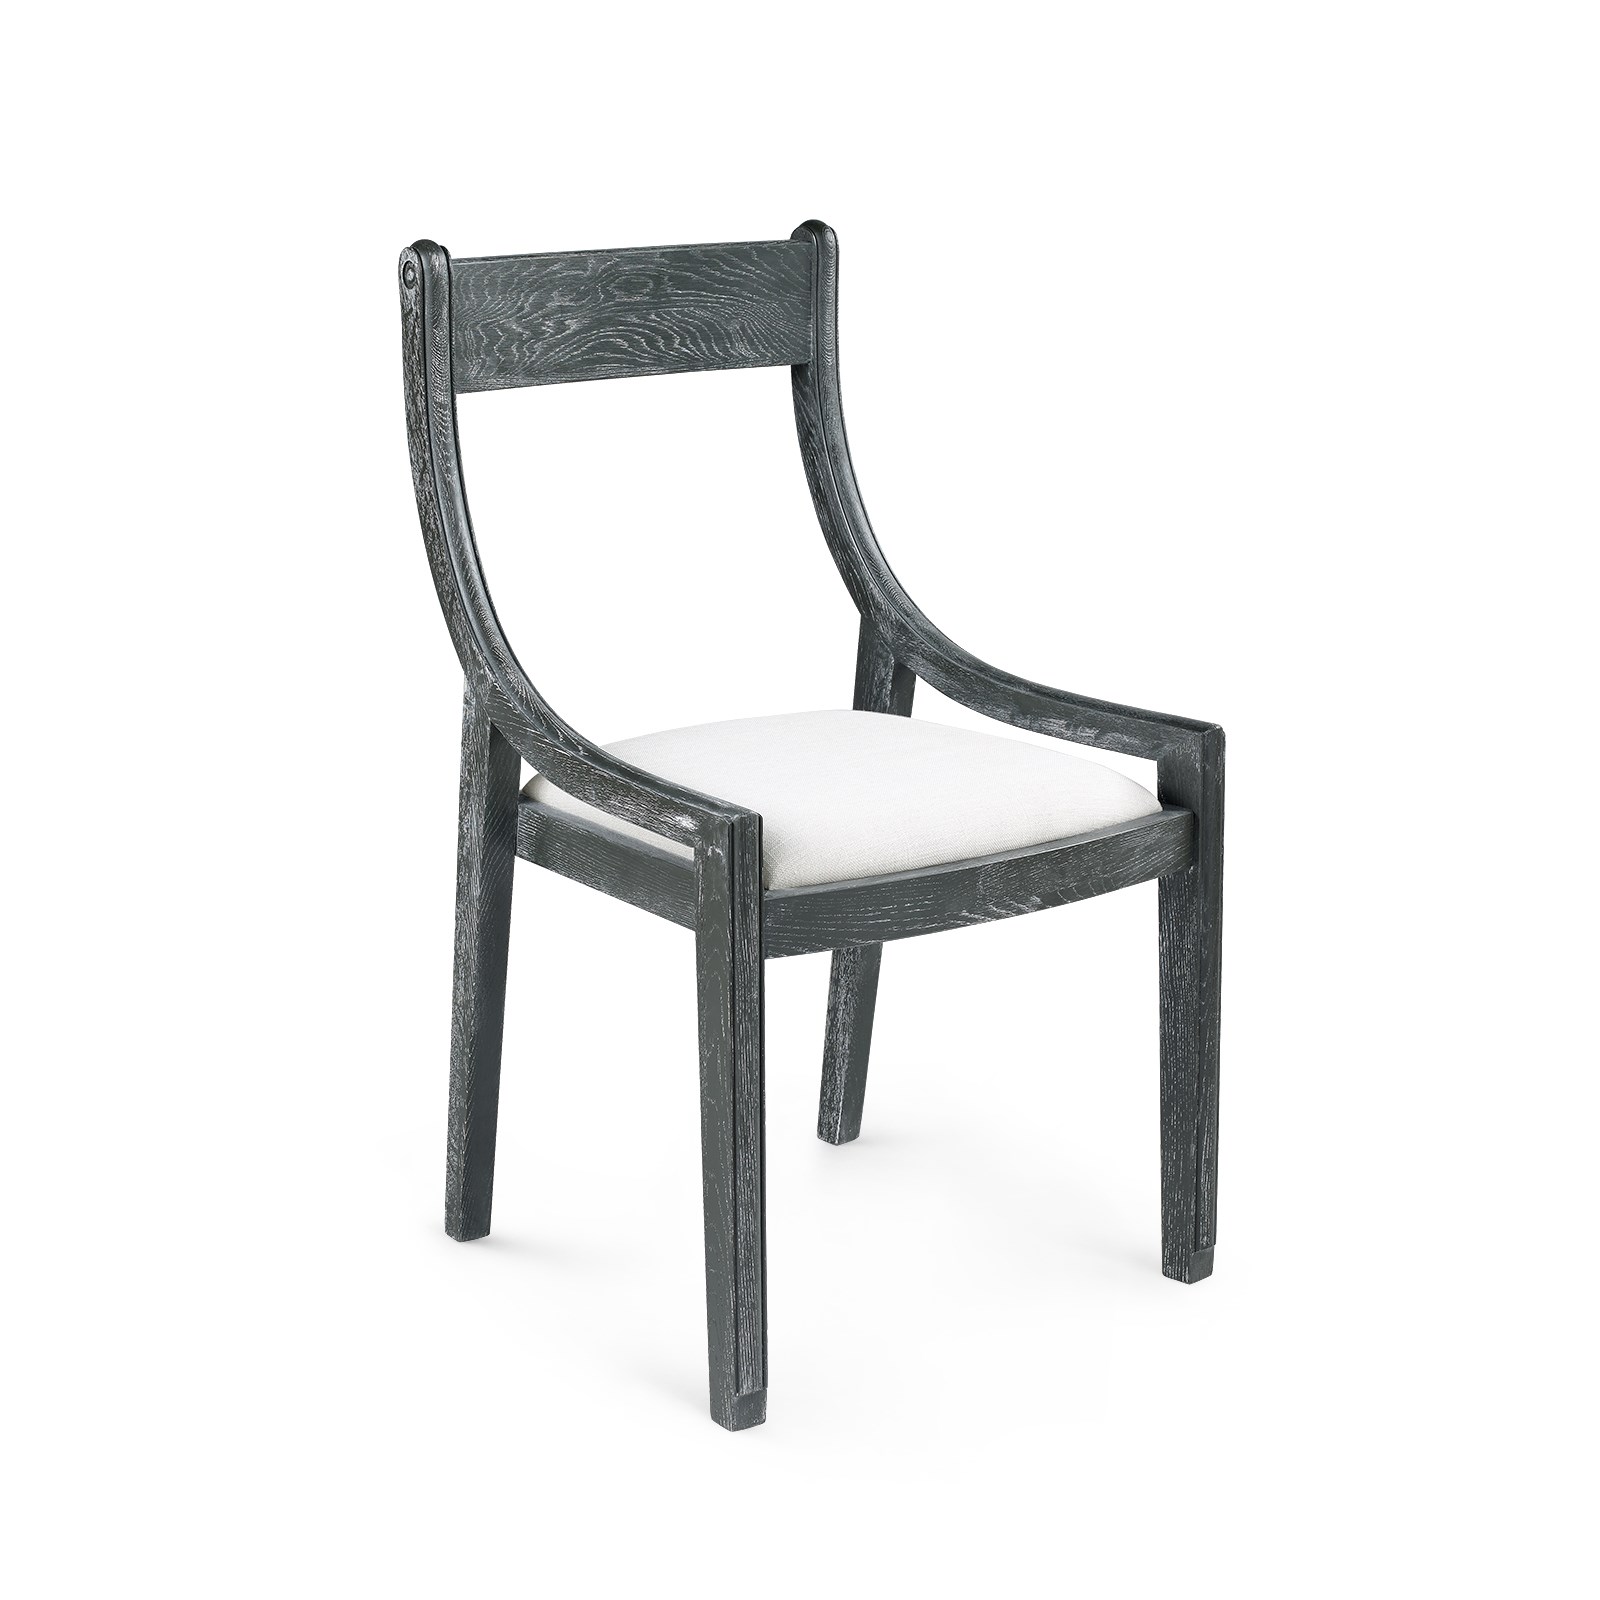 Alexa Chair, Gray